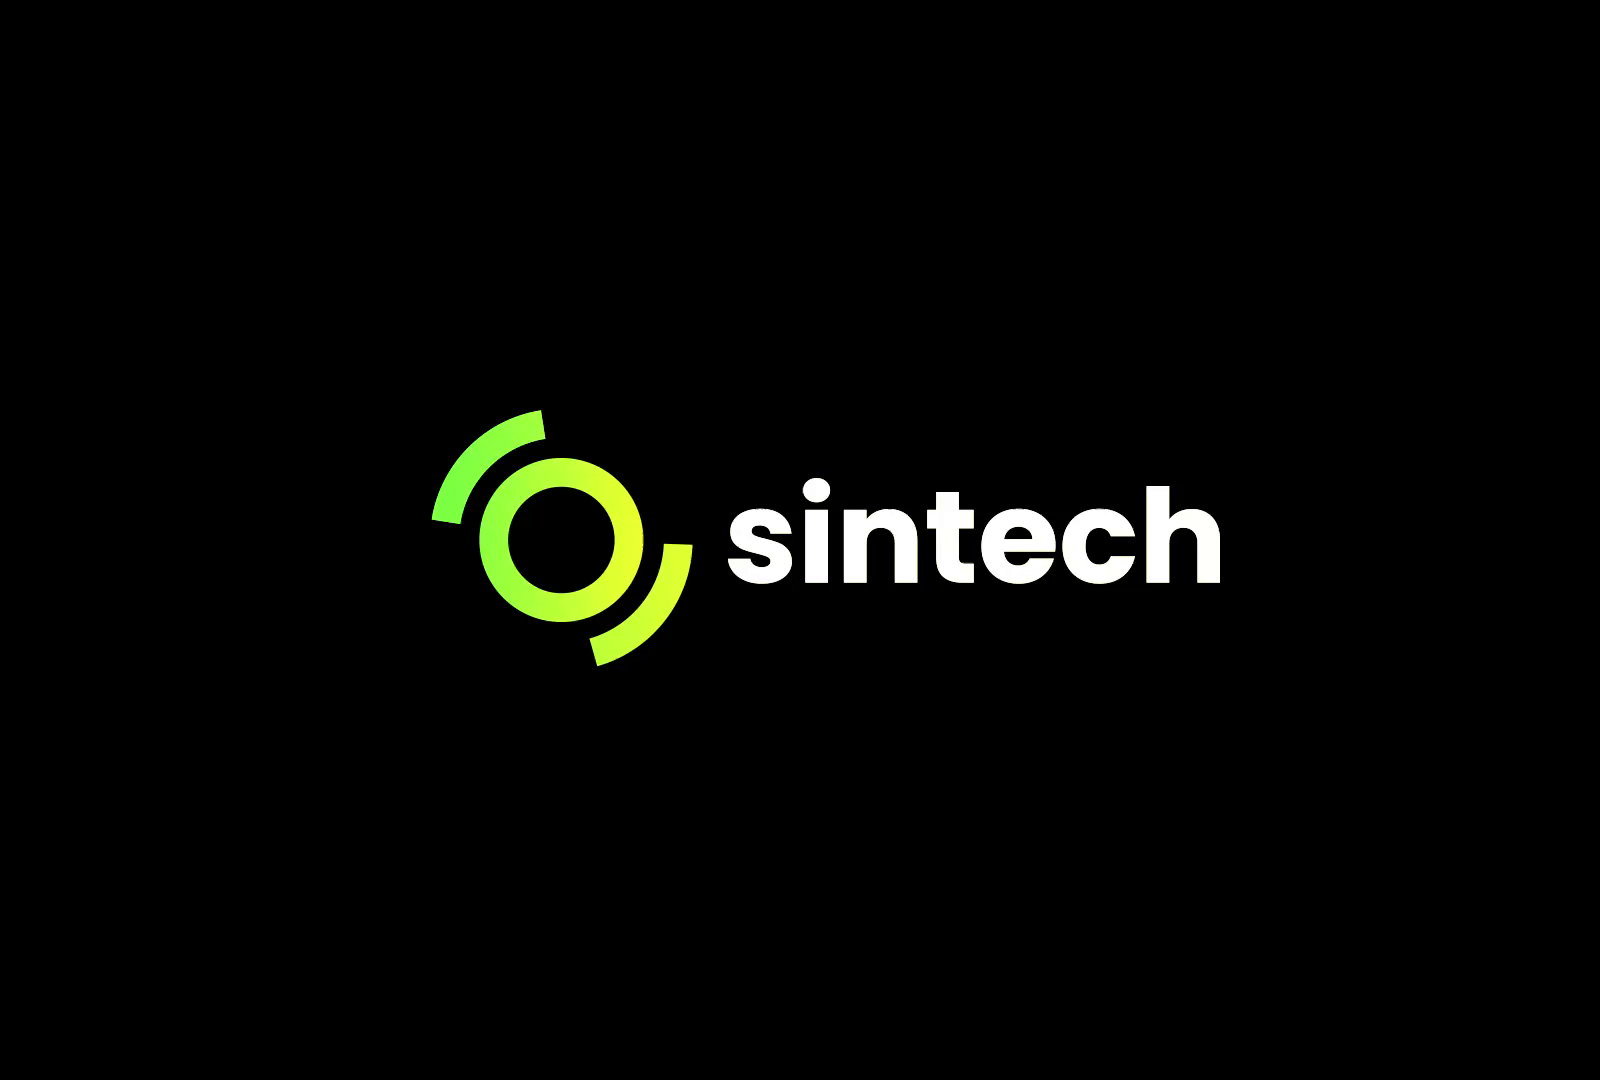 Sintech Logo Animation by Irawan Doni on Dribbble